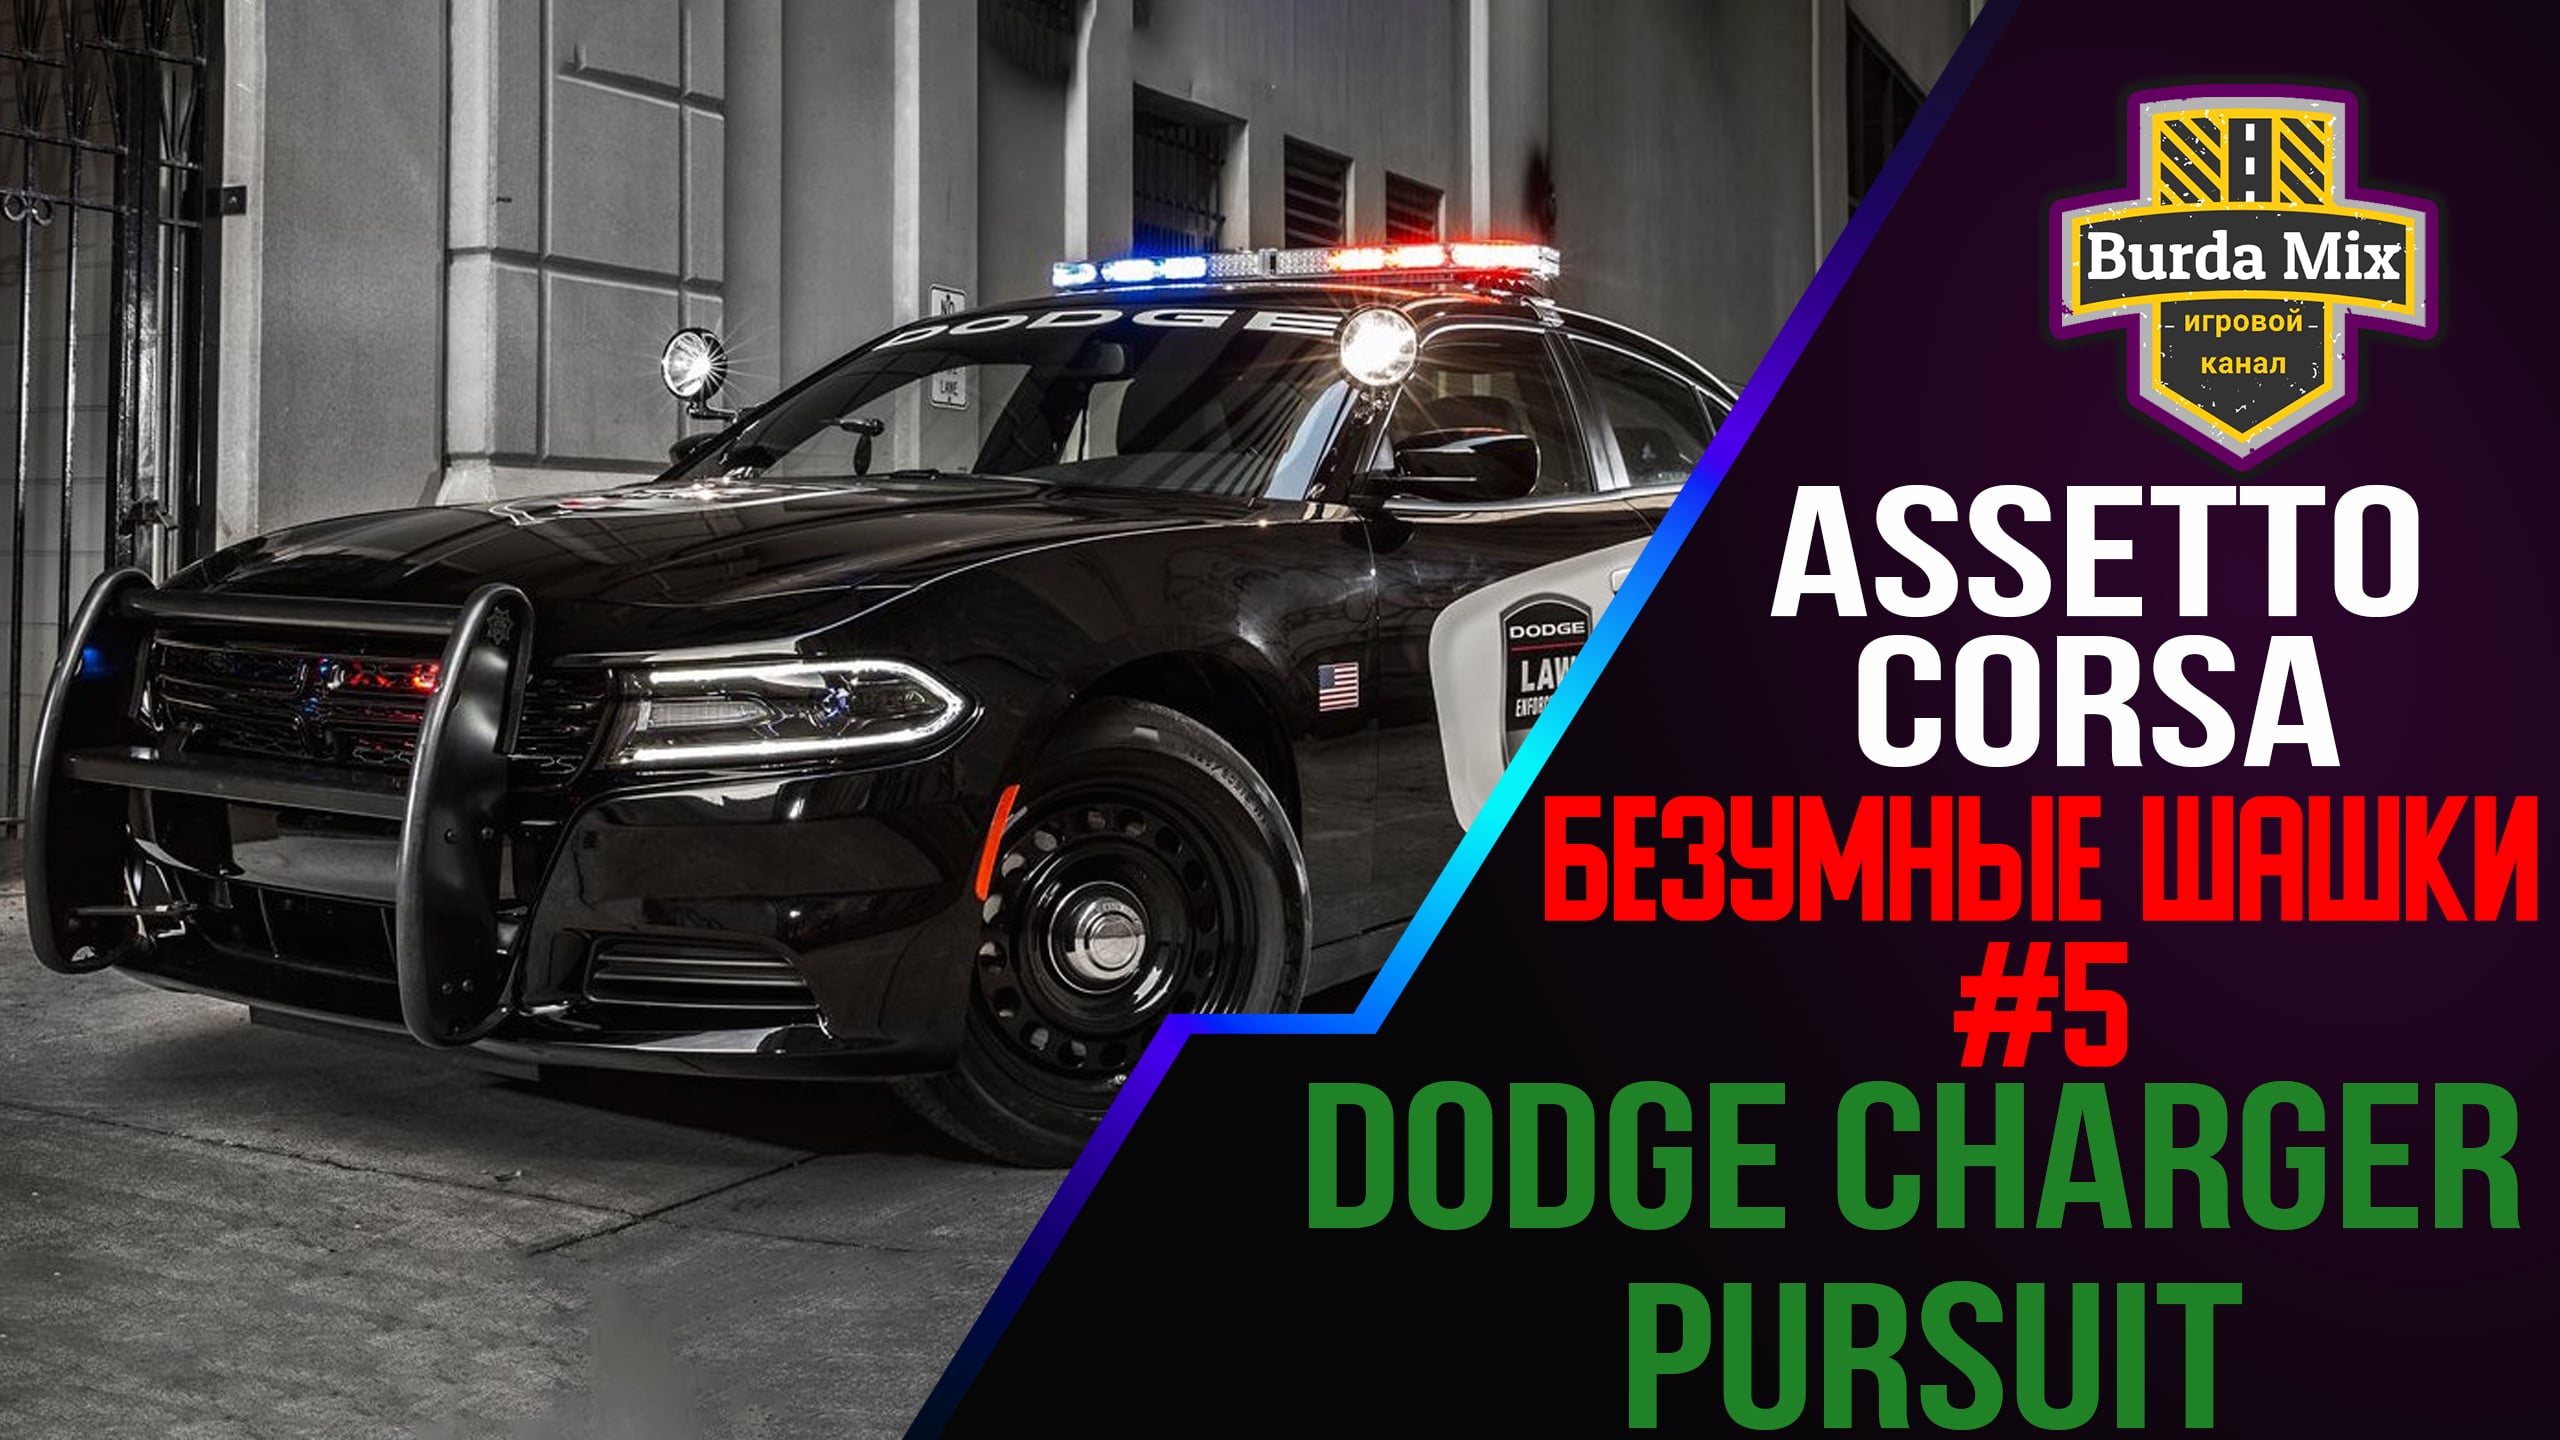 Шашки на Dodge Charger Pursuit с трафиком в  Assetto corsa